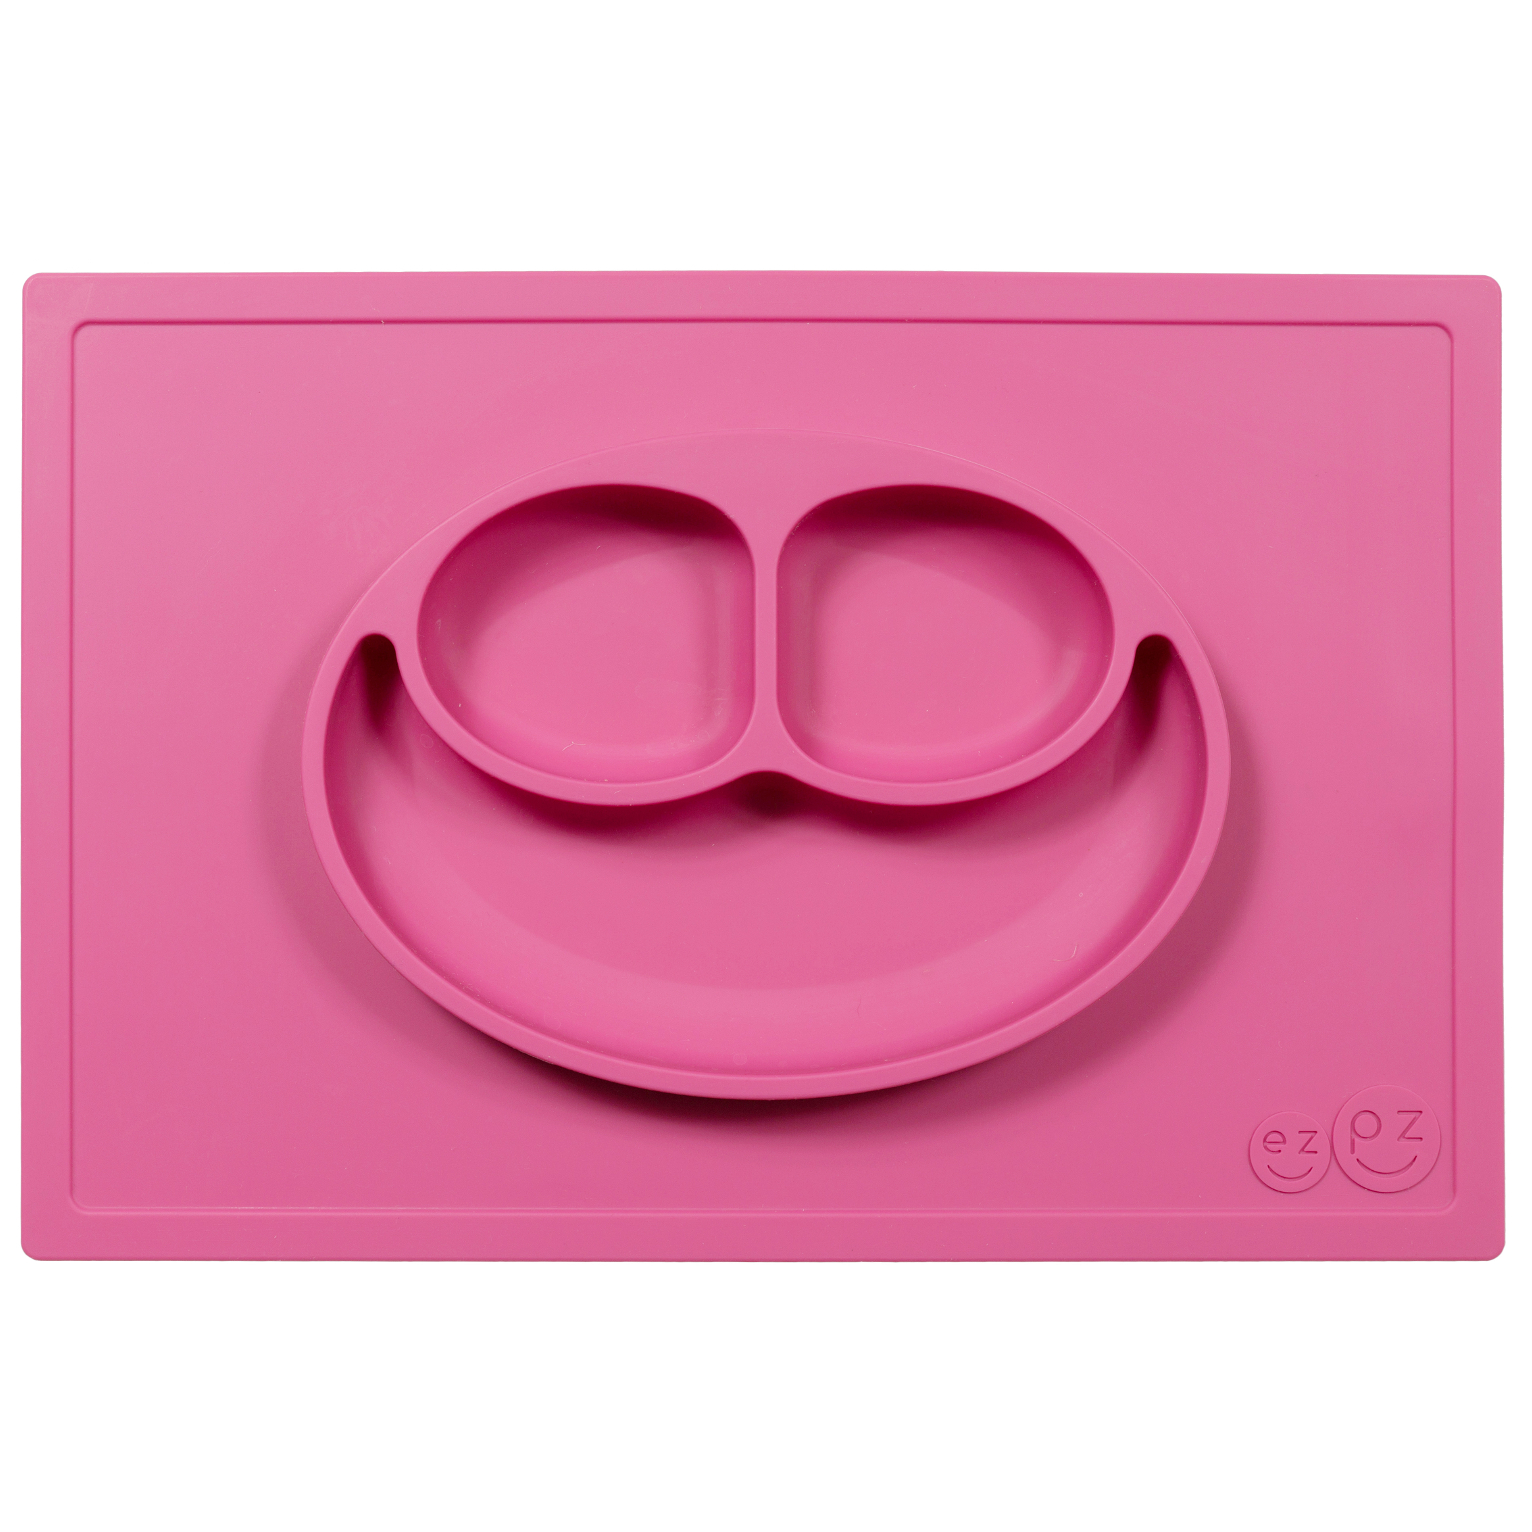 Тарелка с подставкой Happy mat (розовая)